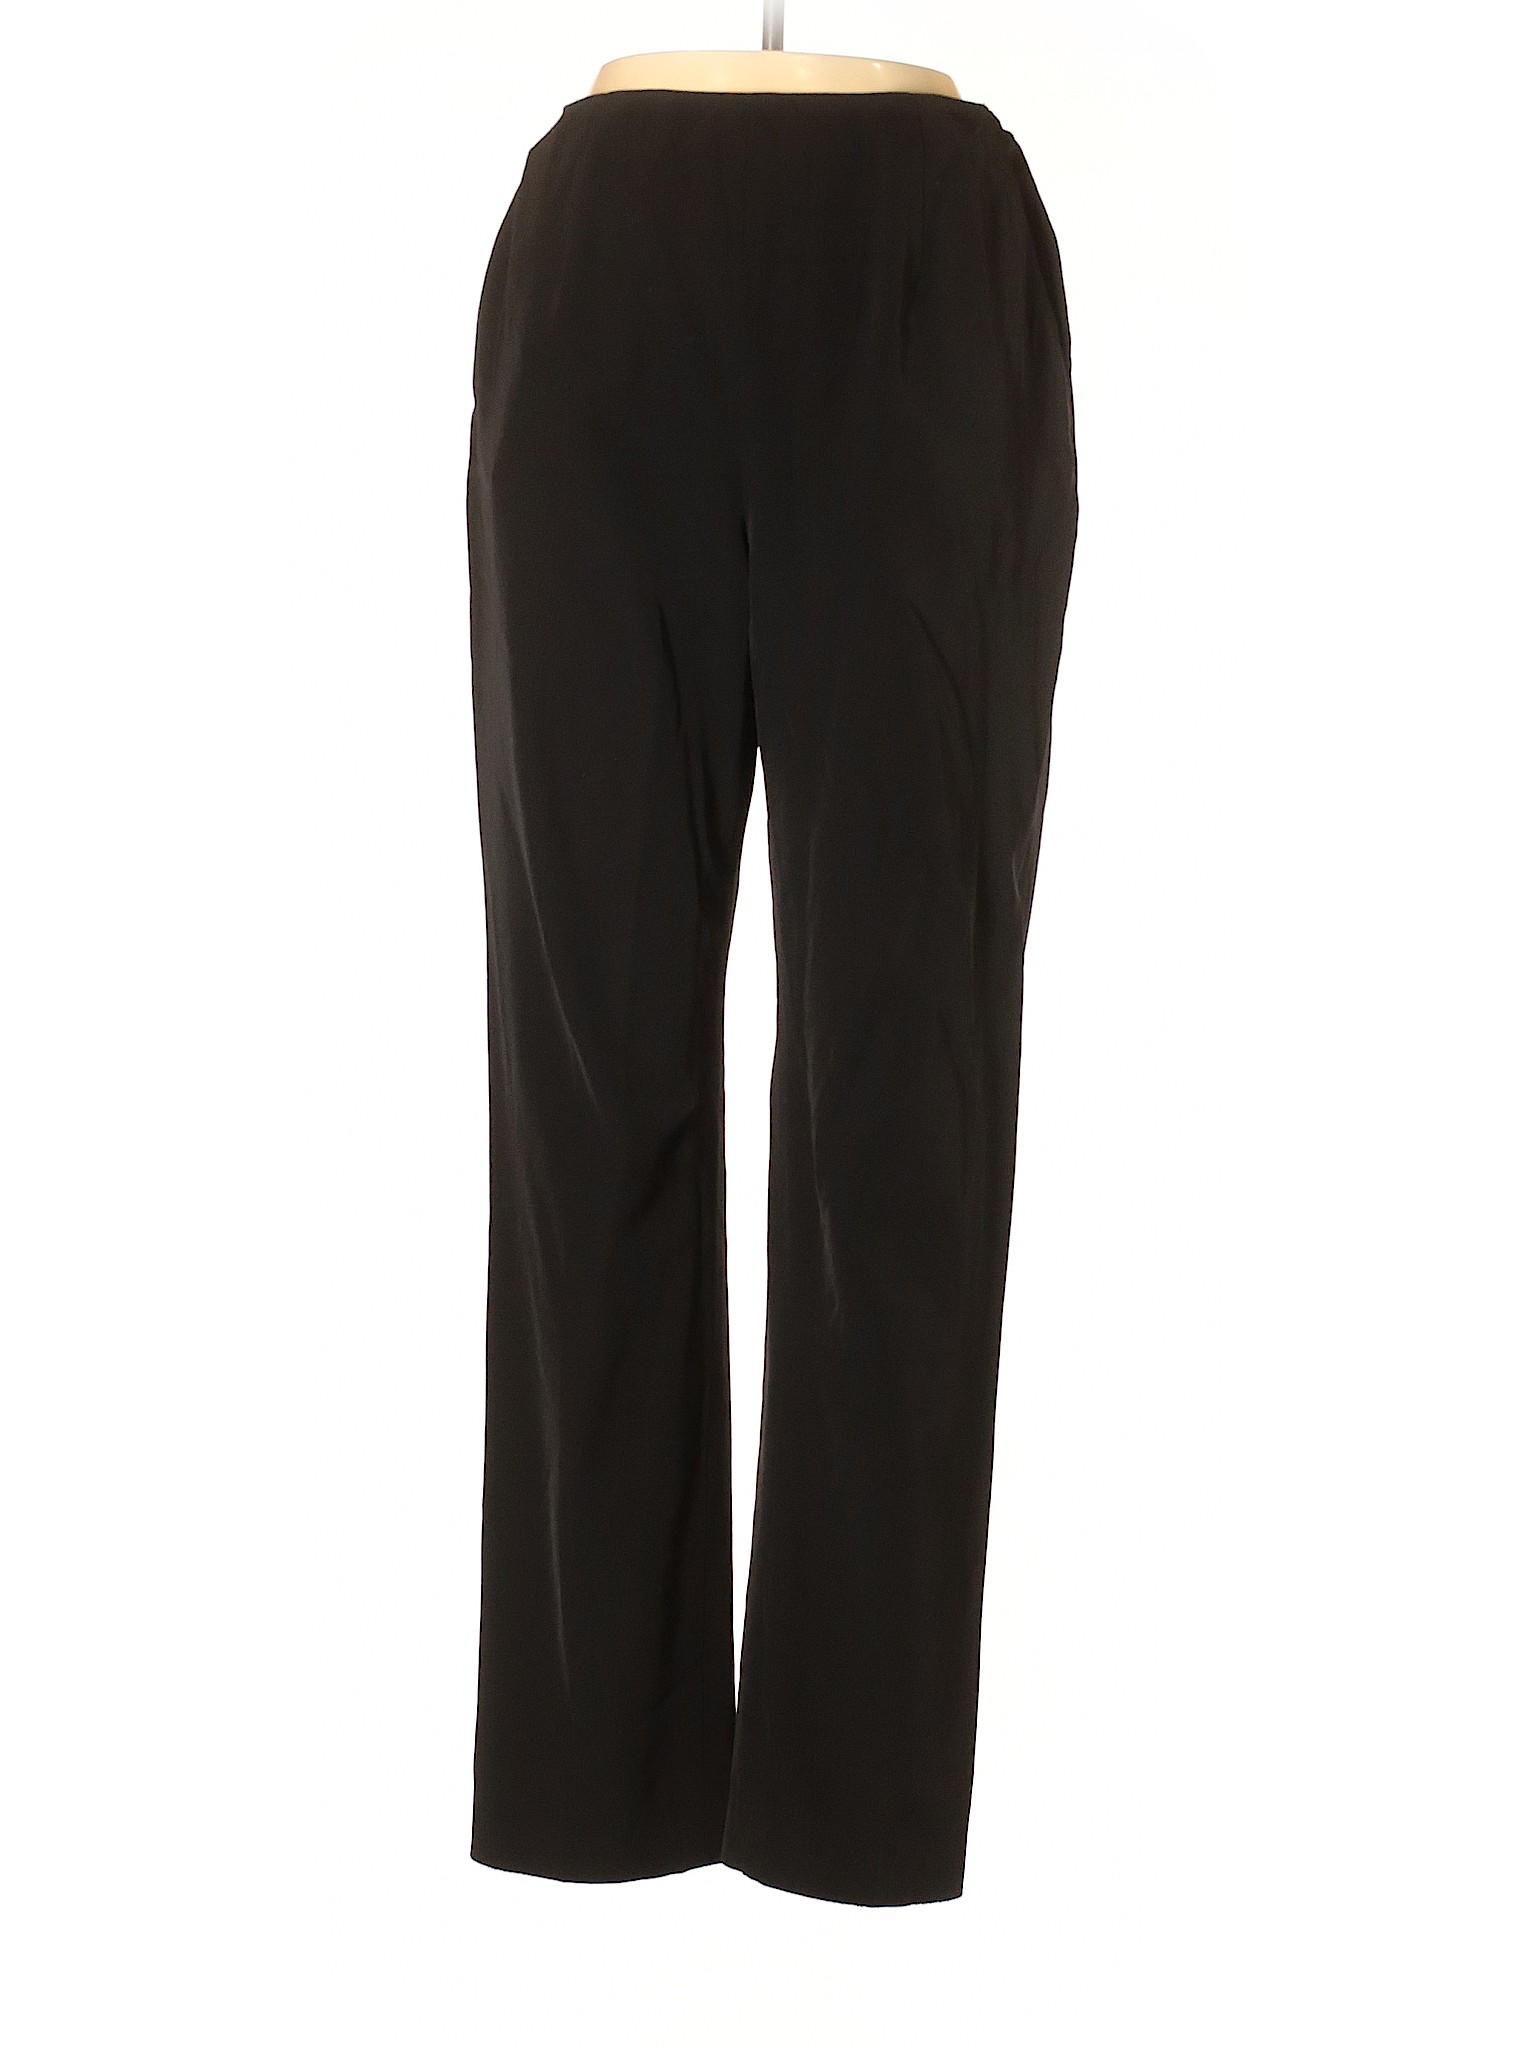 Jones New York Women Black Dress Pants 4 | eBay